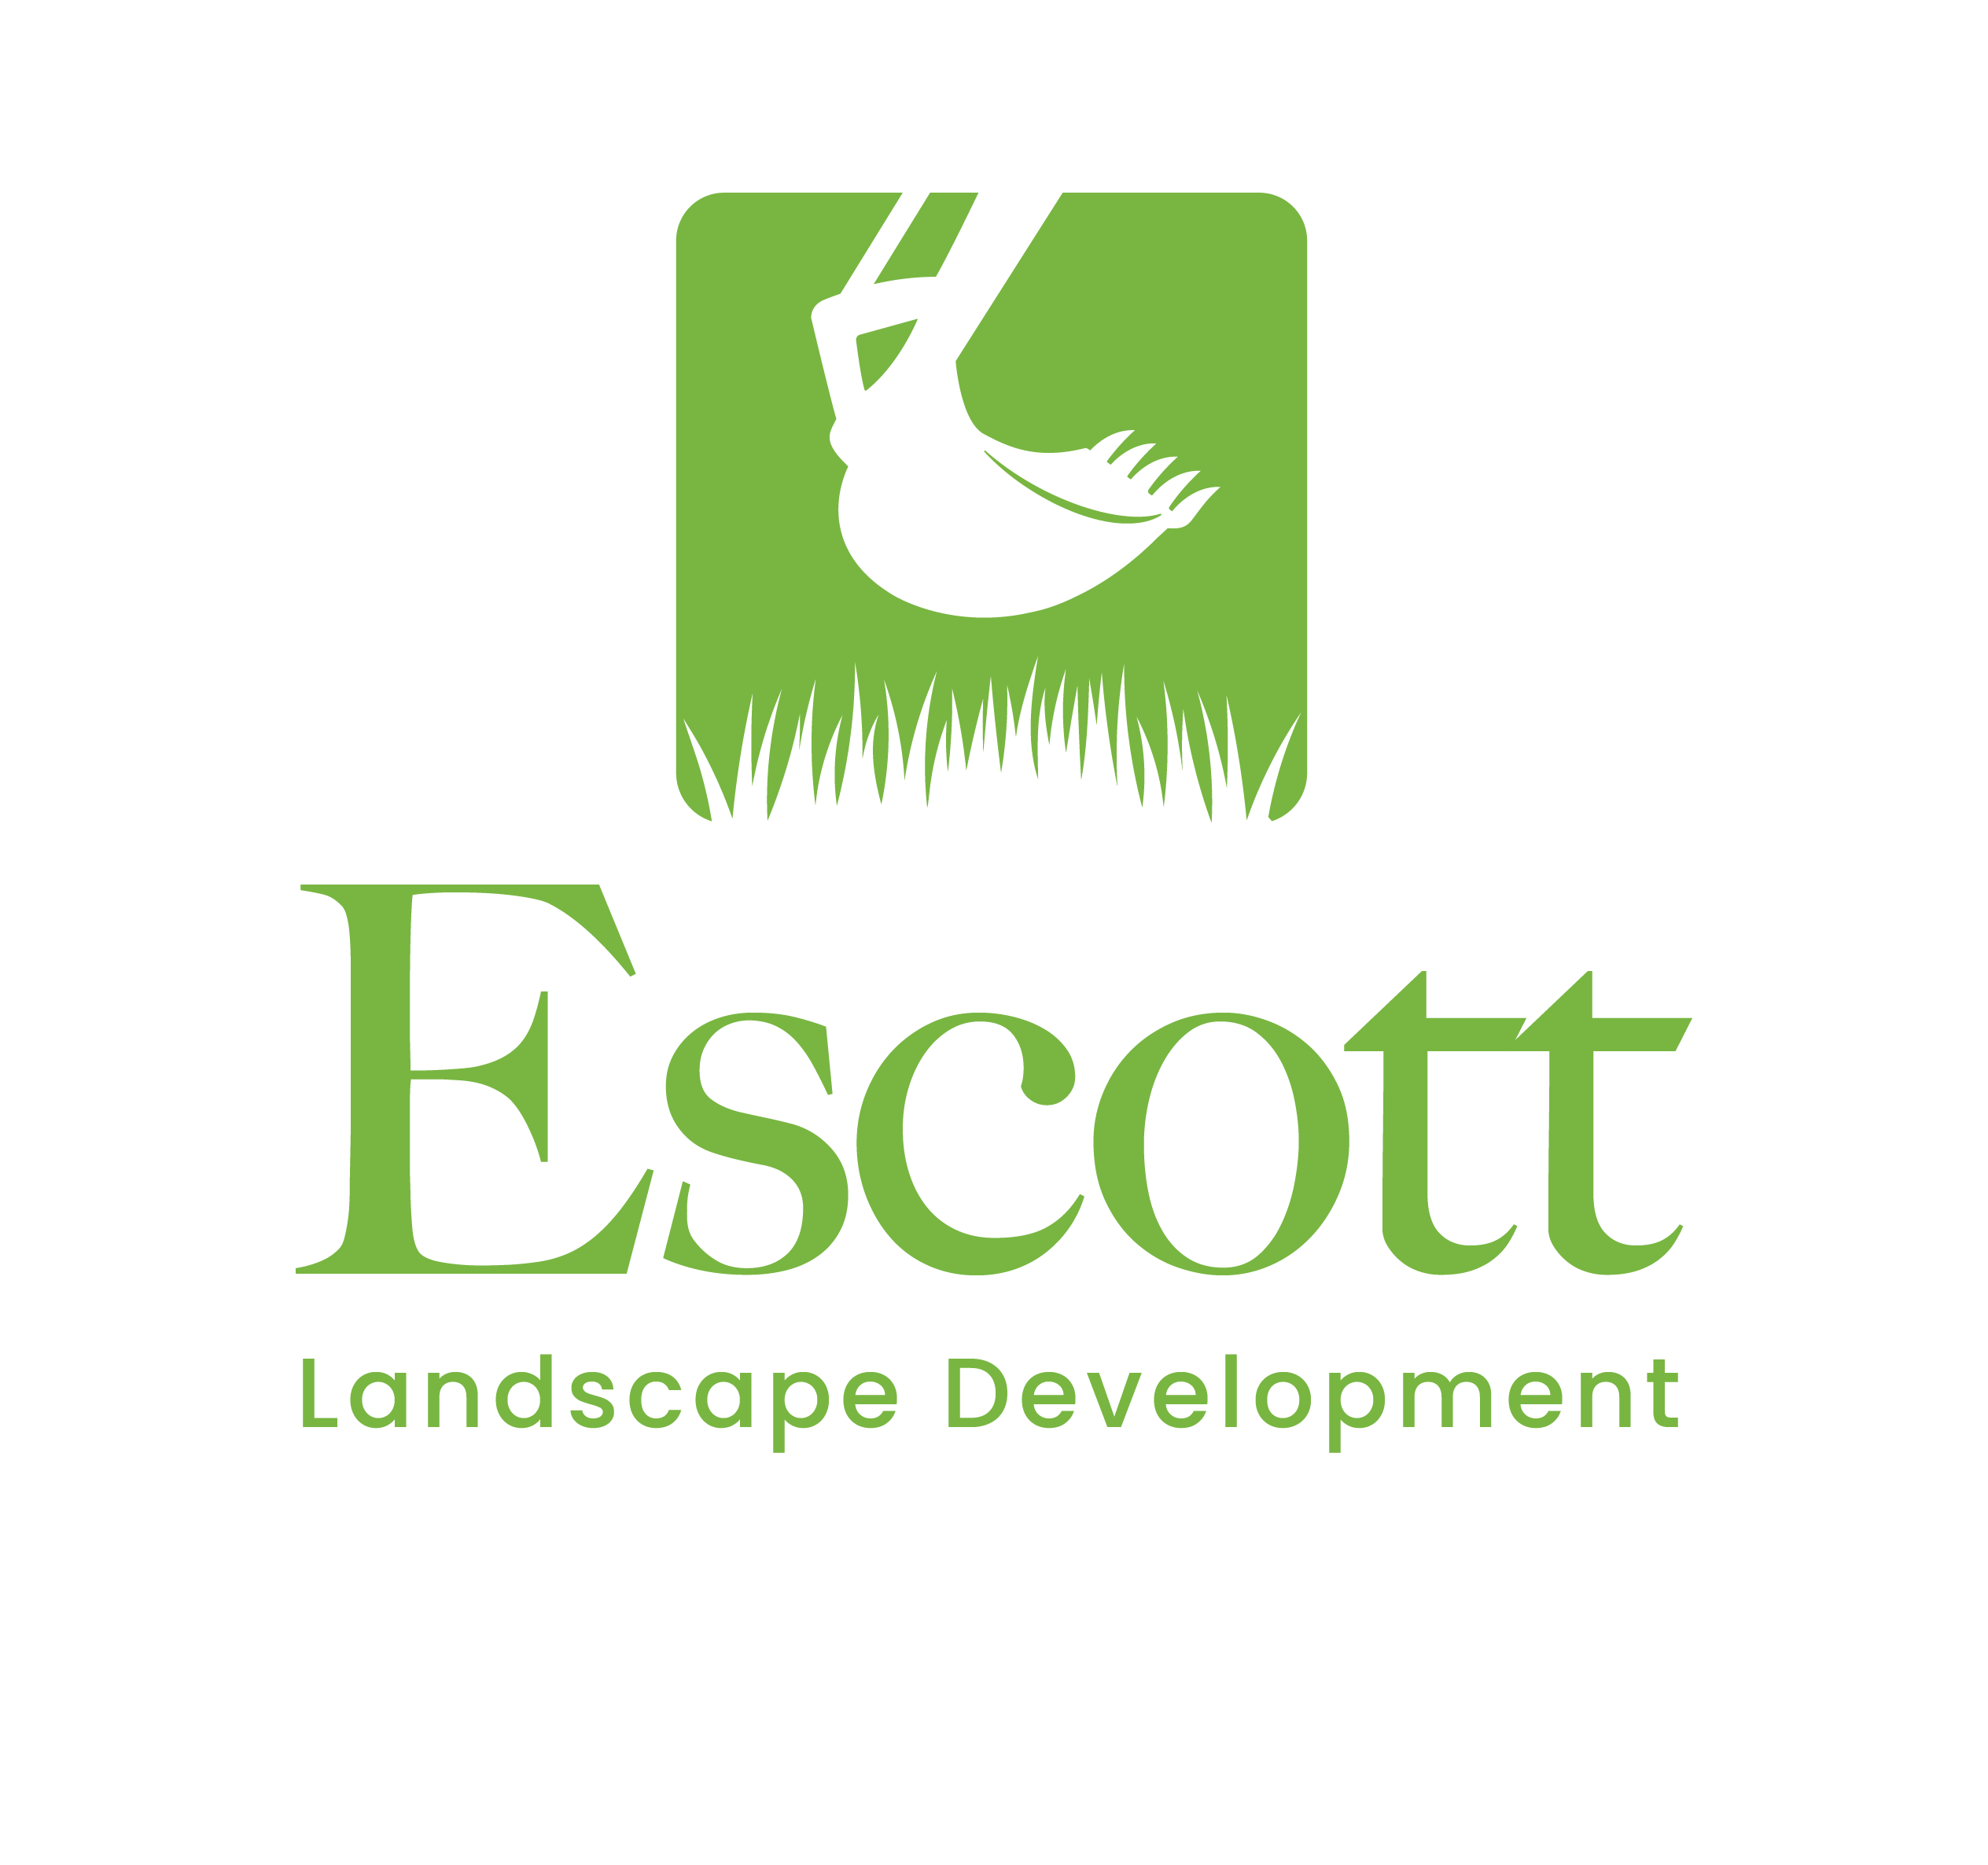 Escott Landscape Development Ltd